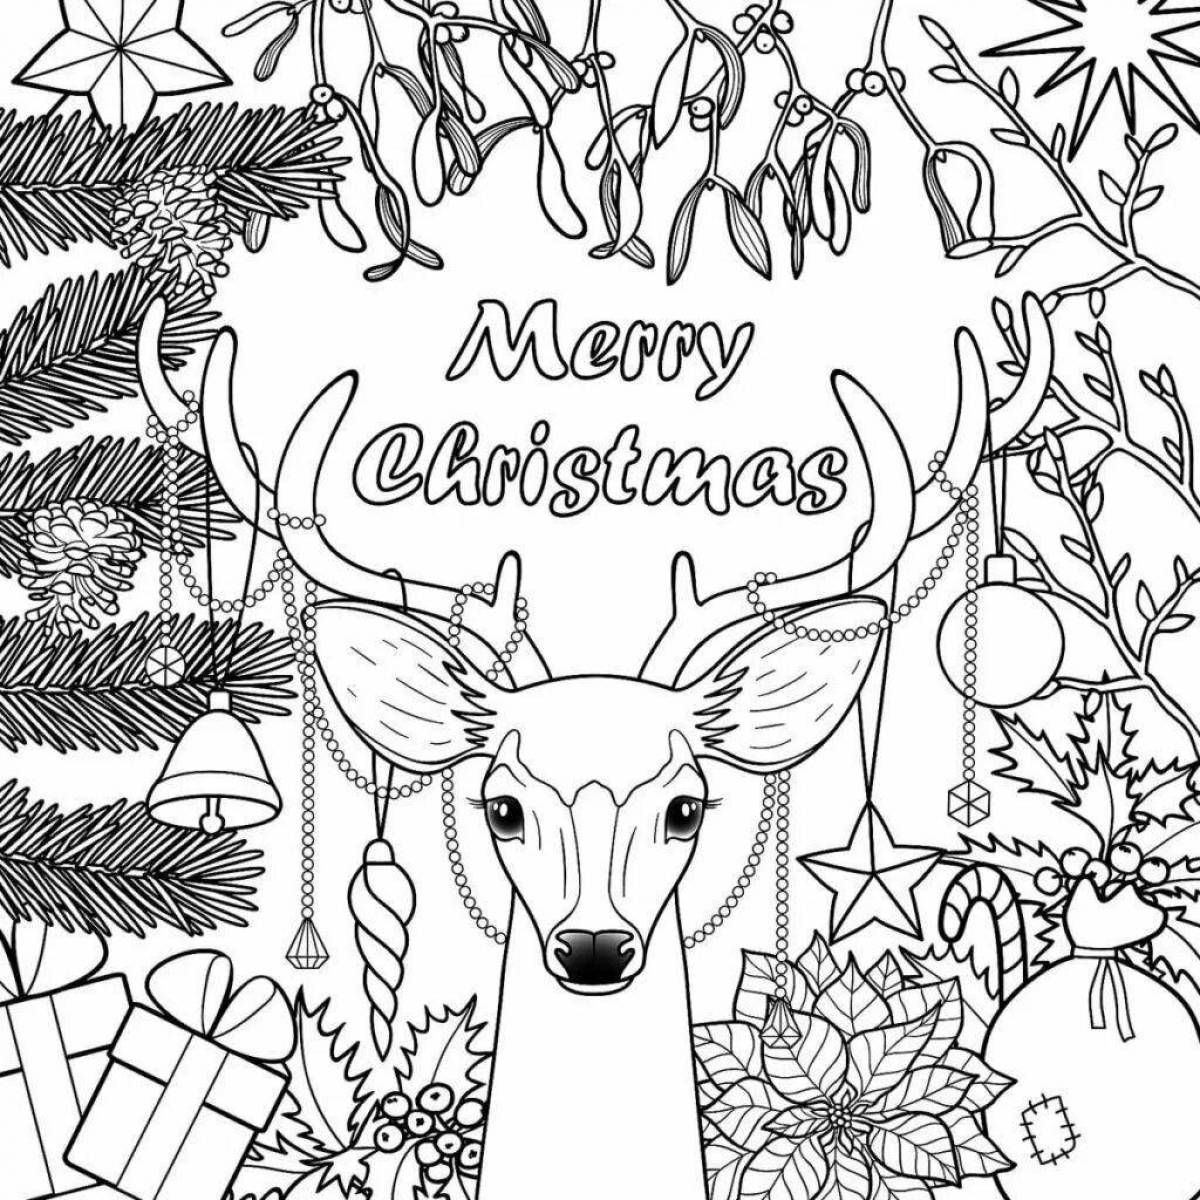 Coloring book shiny Christmas deer